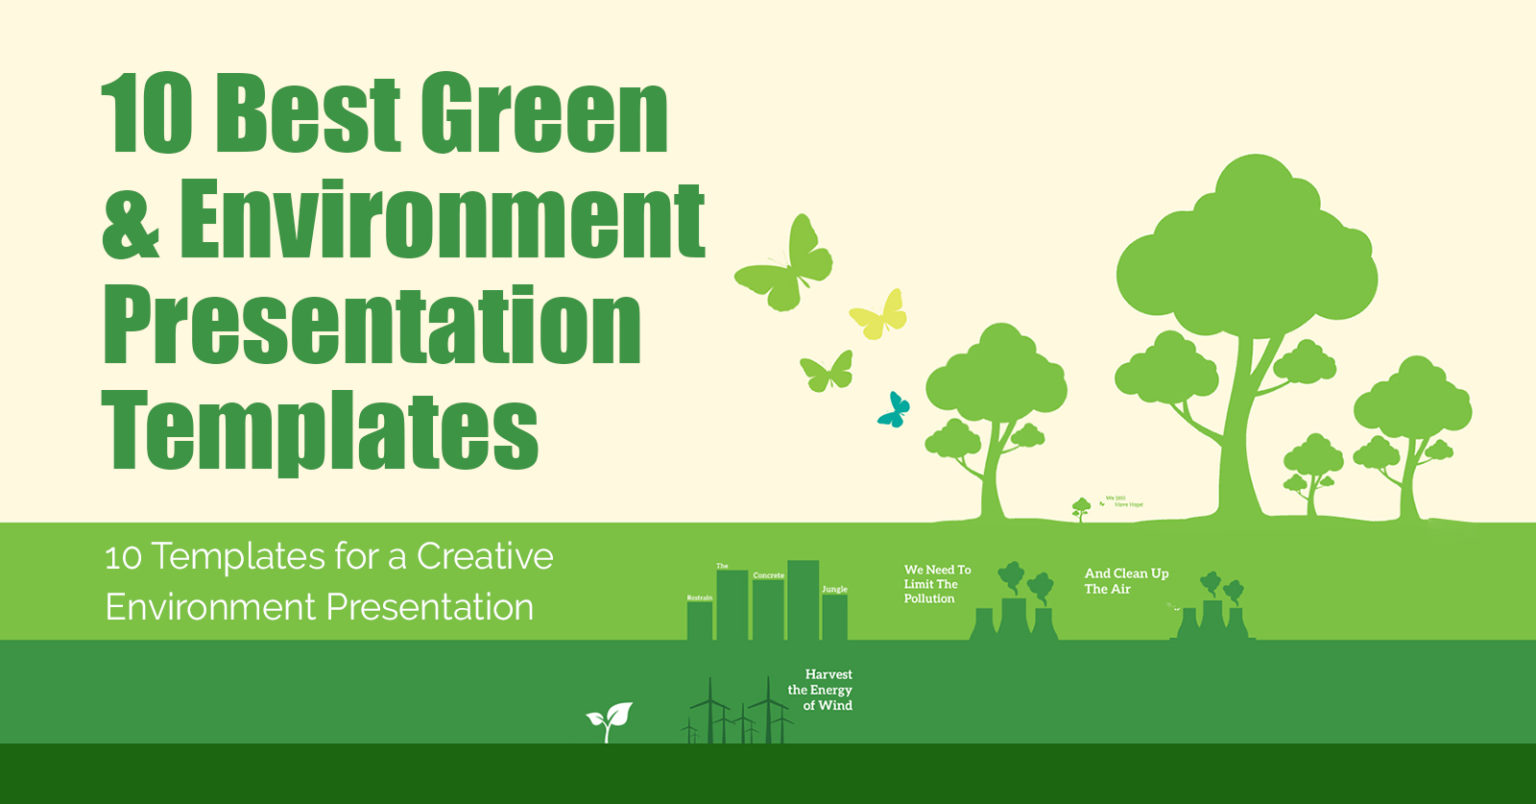 10 Best Green Environment Presentation Templates Prezibase